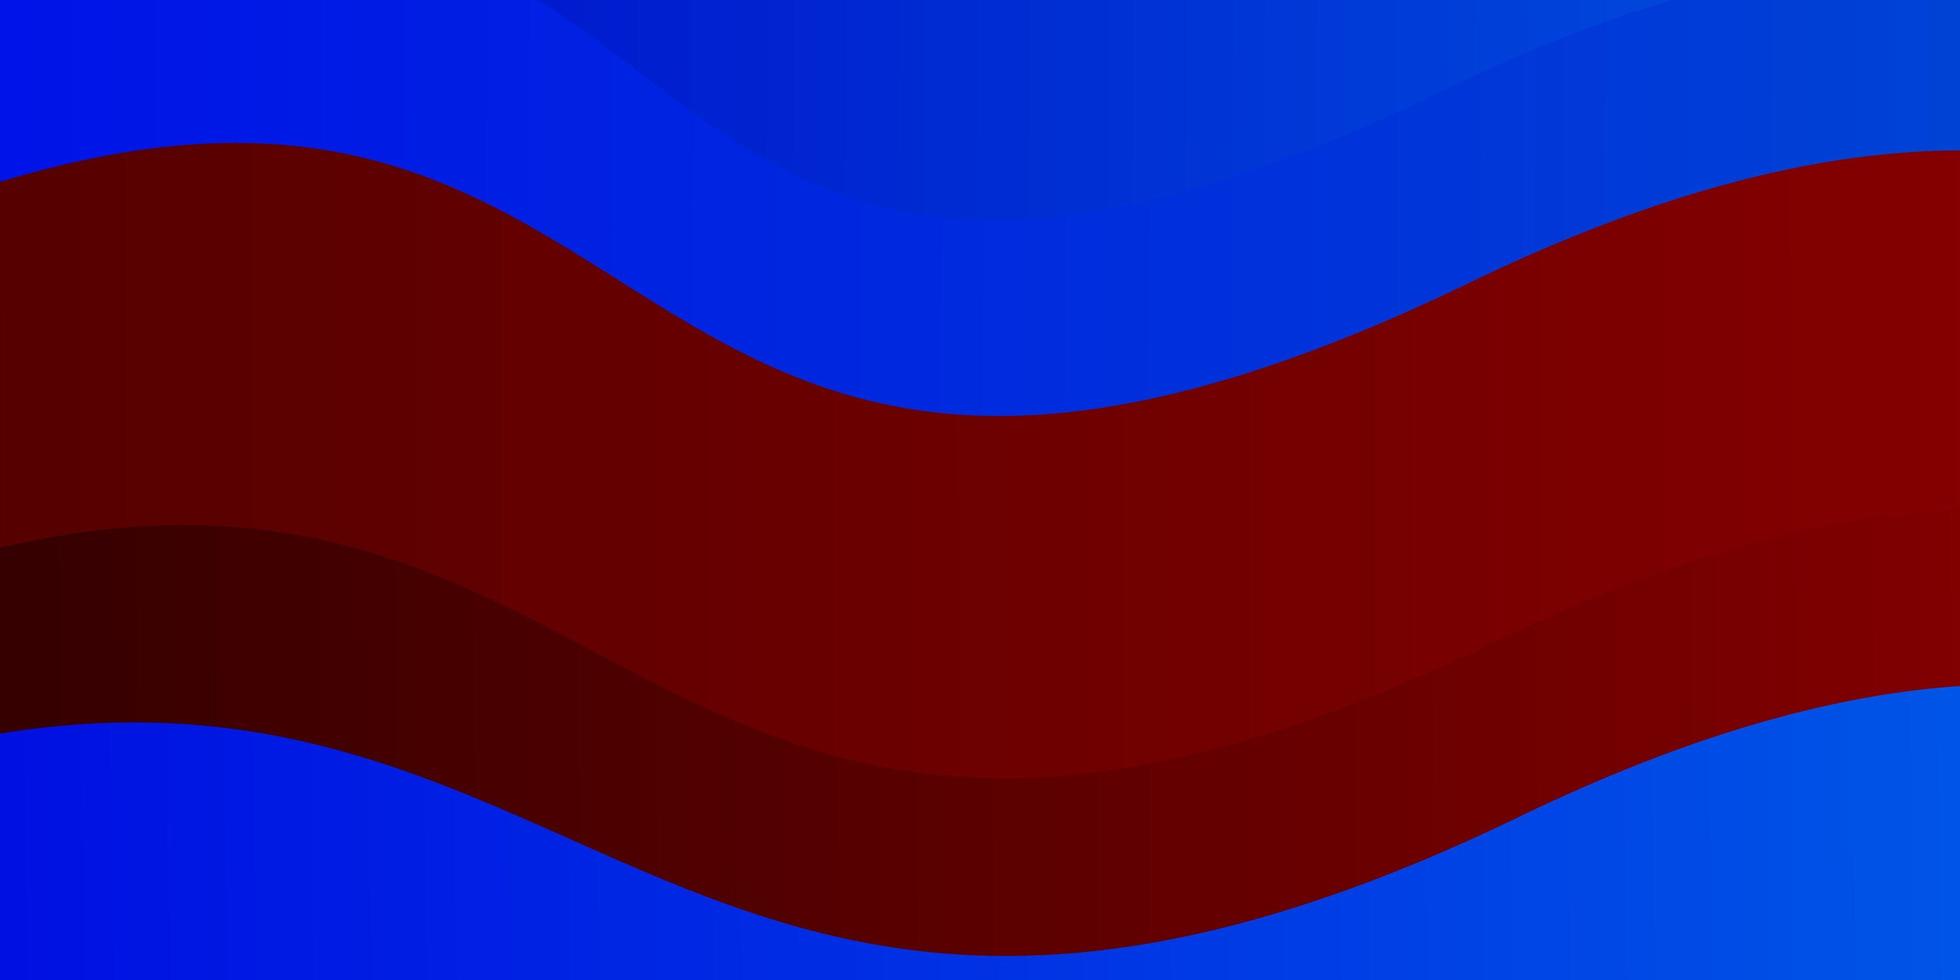 ljusblå, röd vektorbakgrund med sneda linjer. vektor